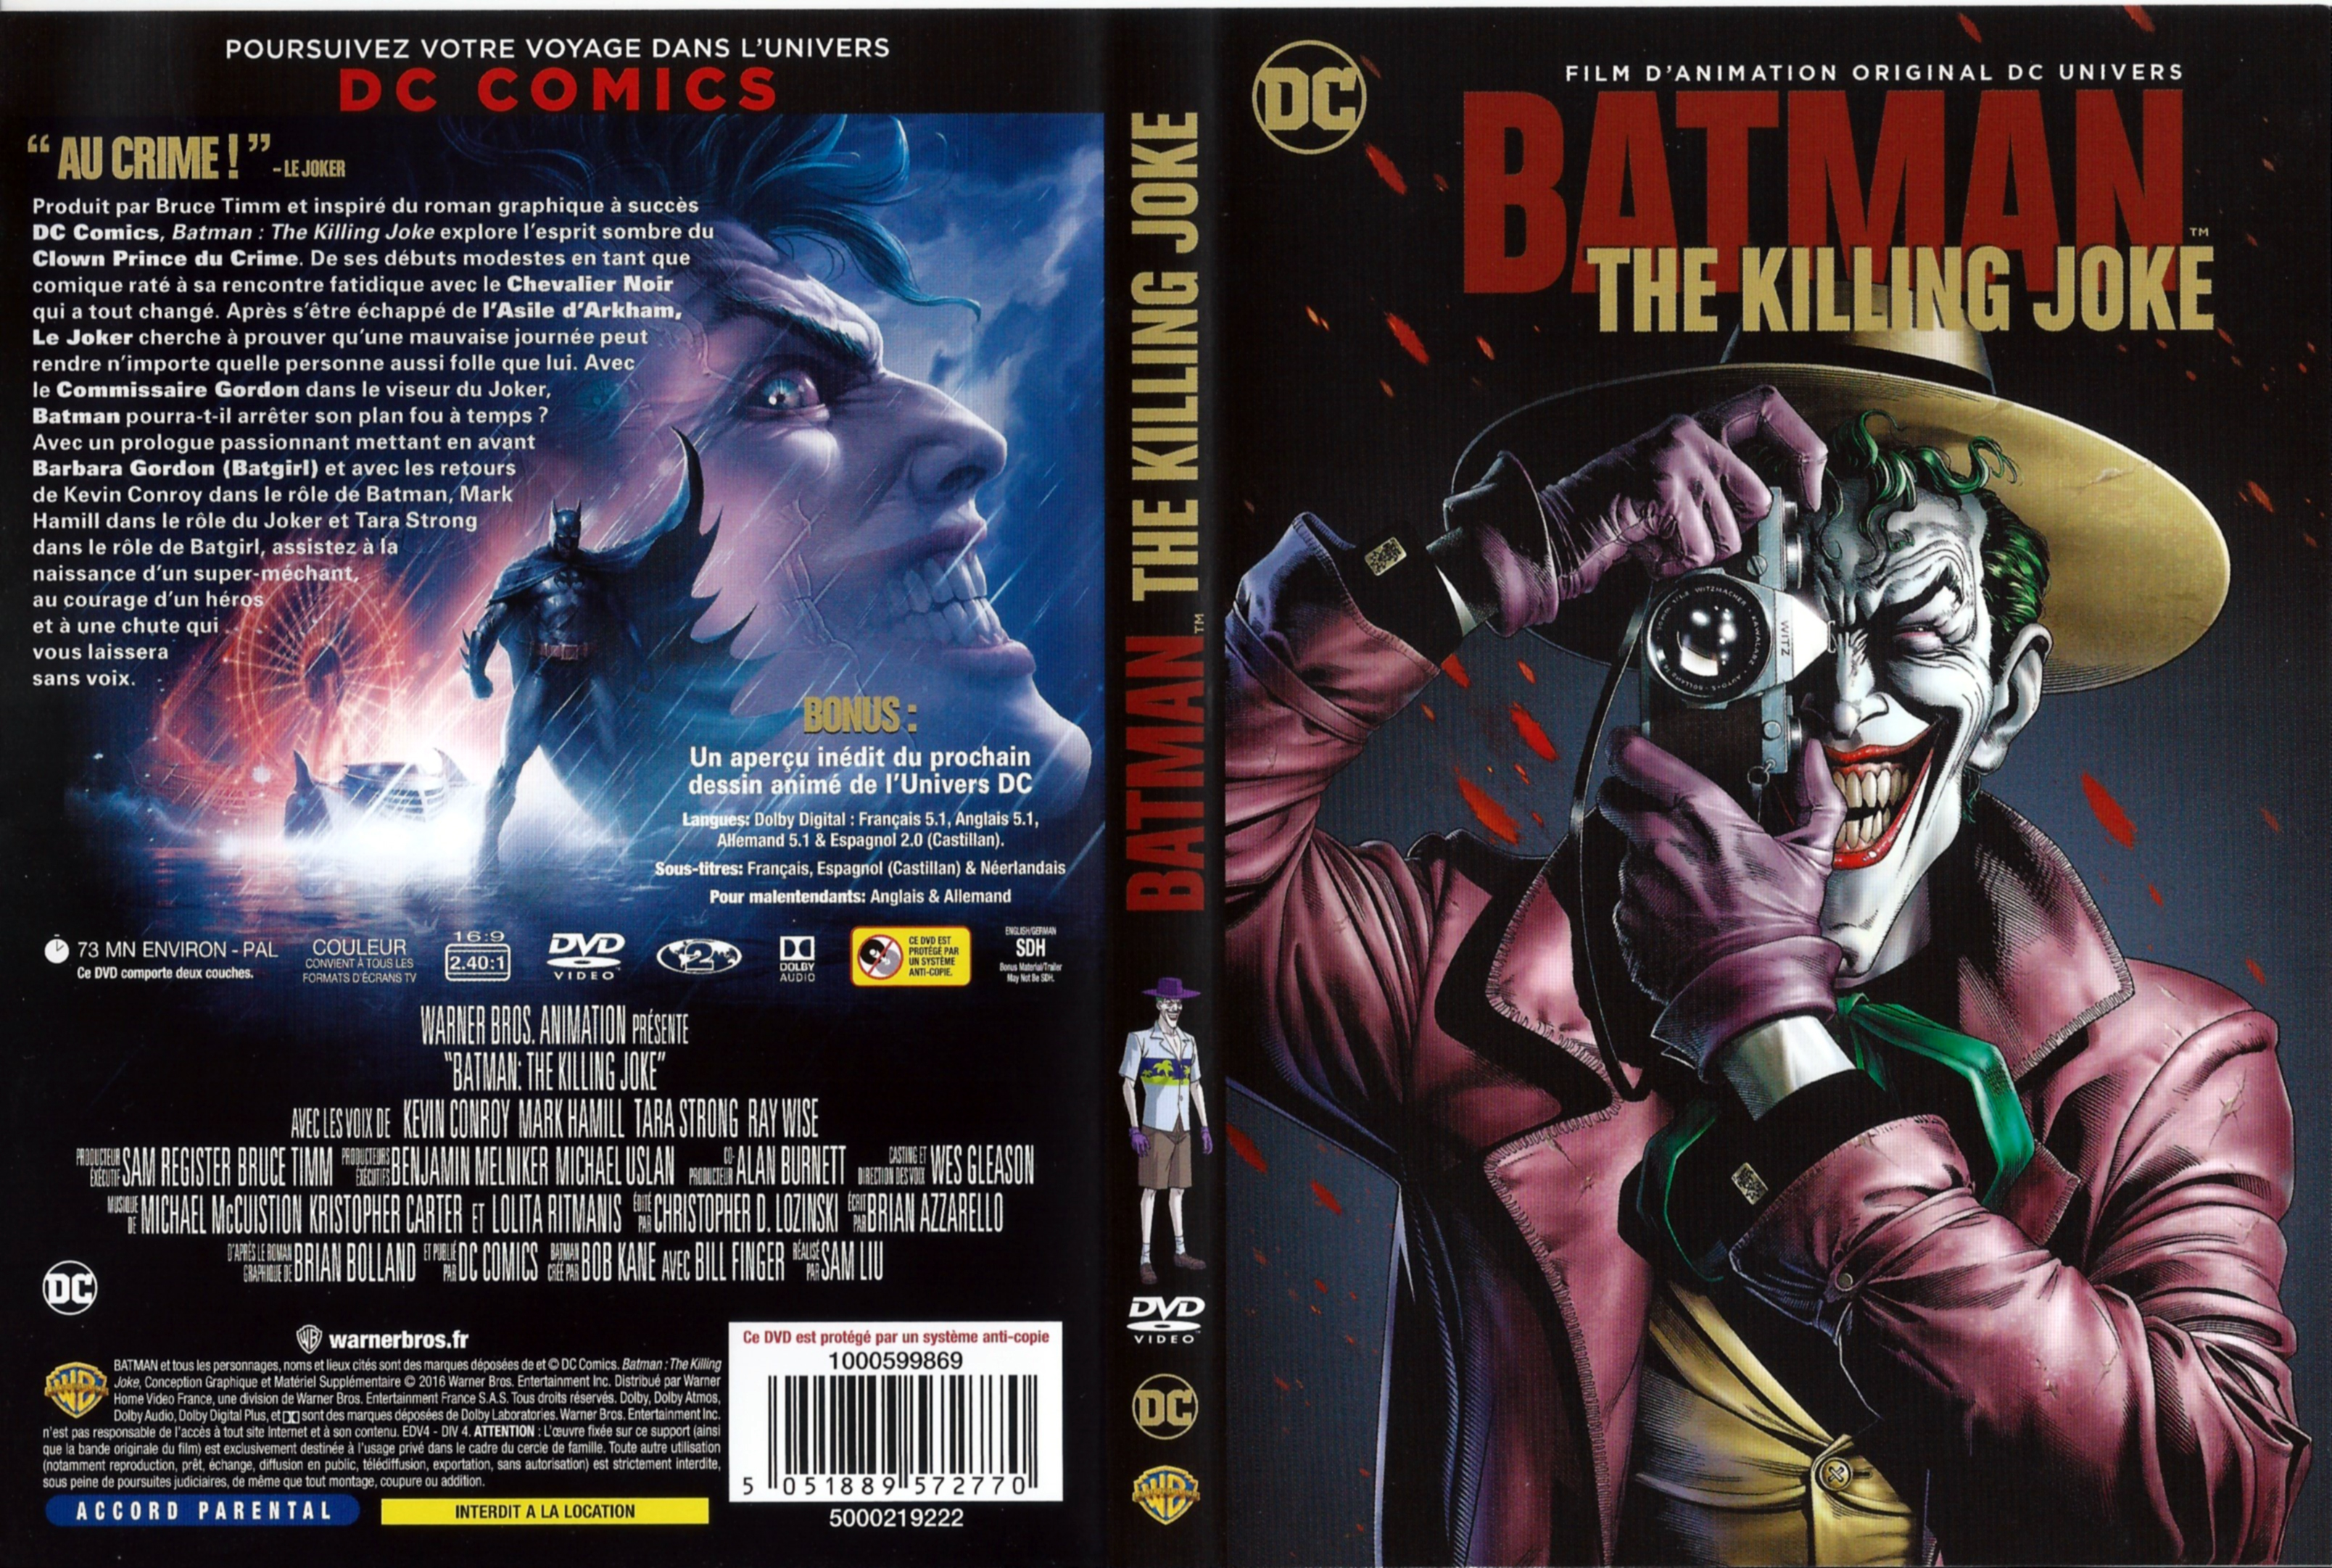 Jaquette DVD Batman The Killing Joke